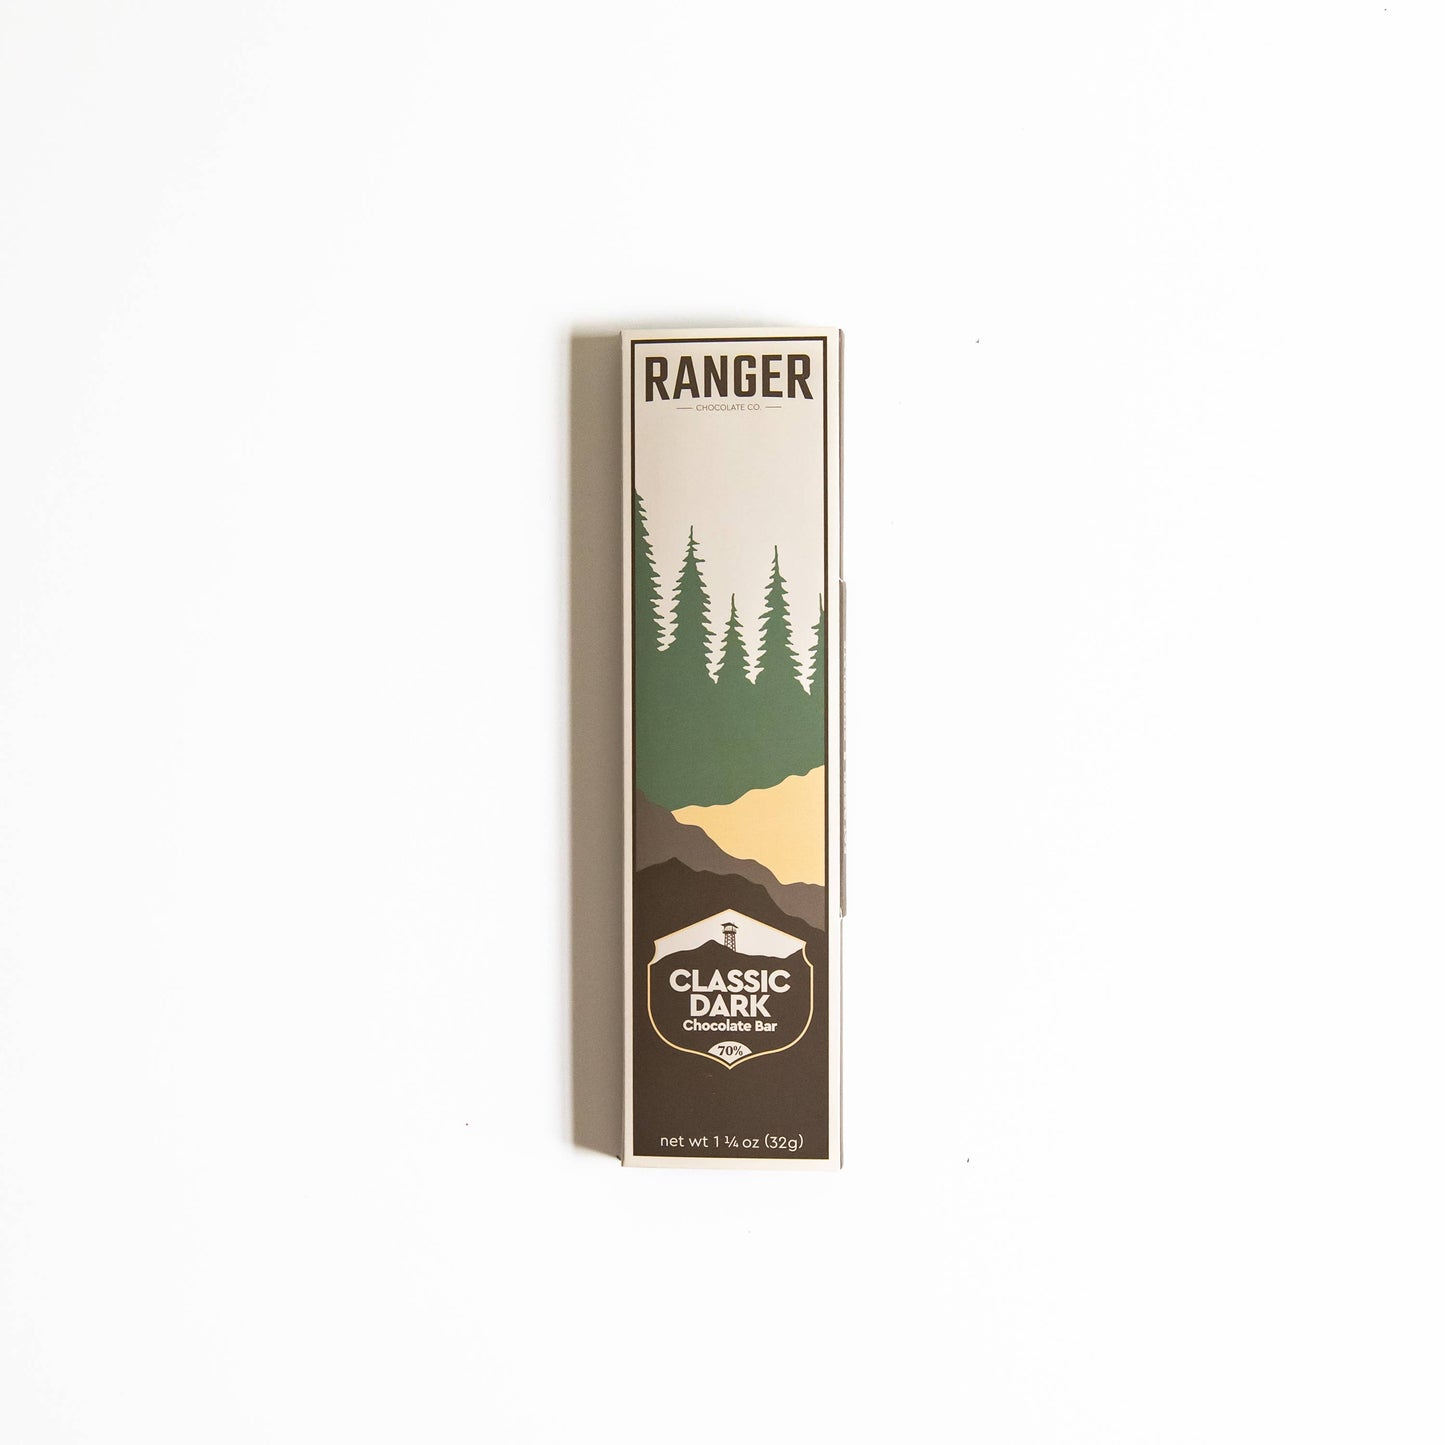 Ranger Chocolate Co. - Classic Dark Chocolate Bar